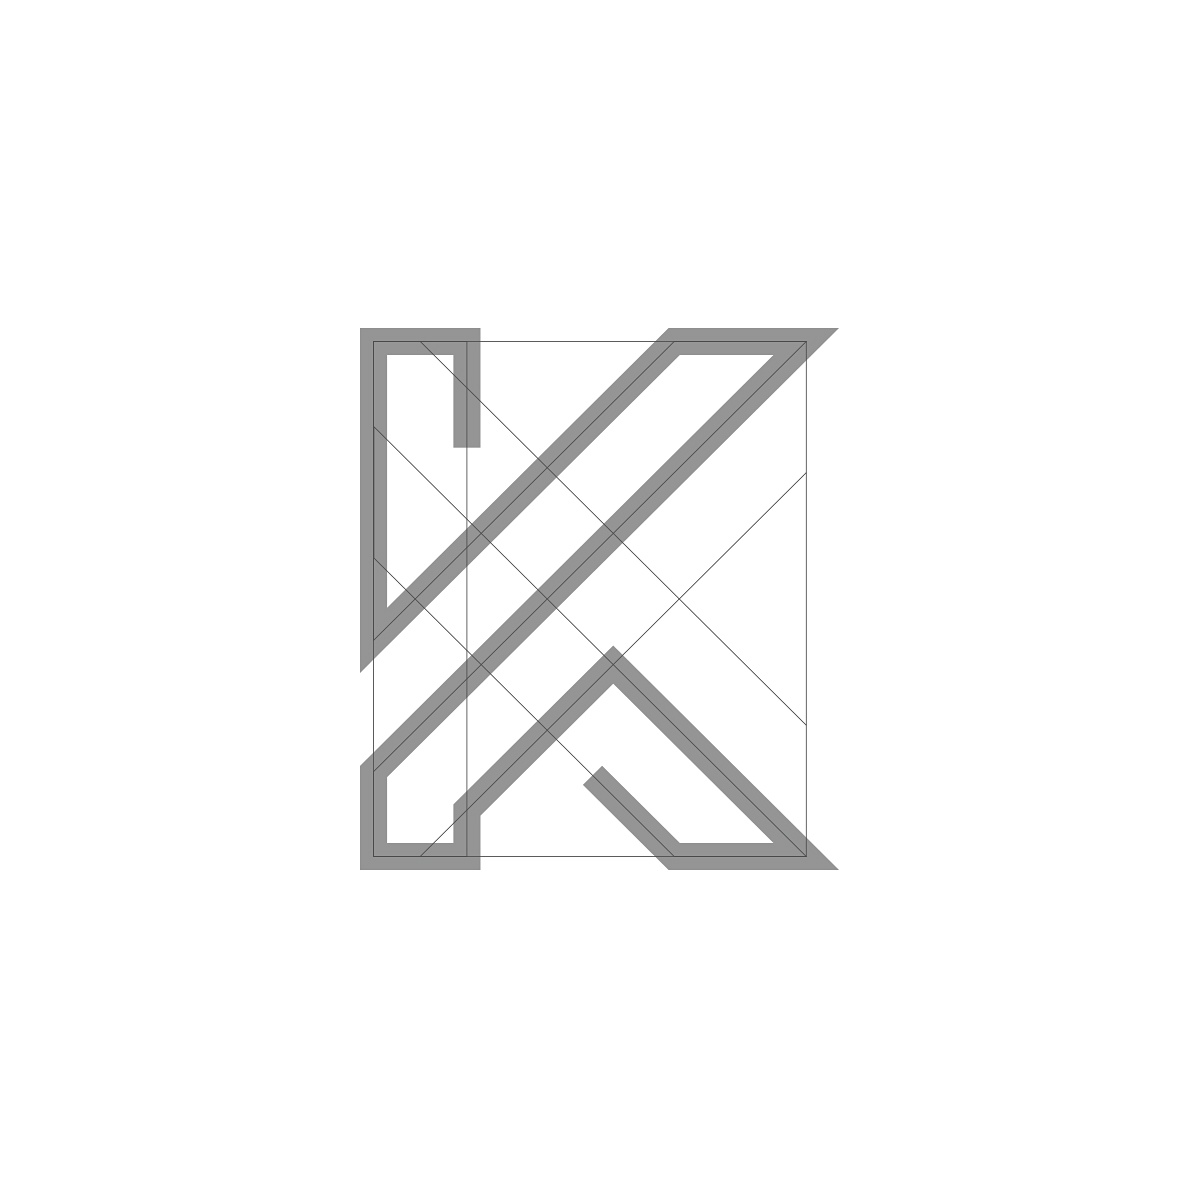 https://ponad.pl/wp-content/uploads/2017/02/logo_new.jpg